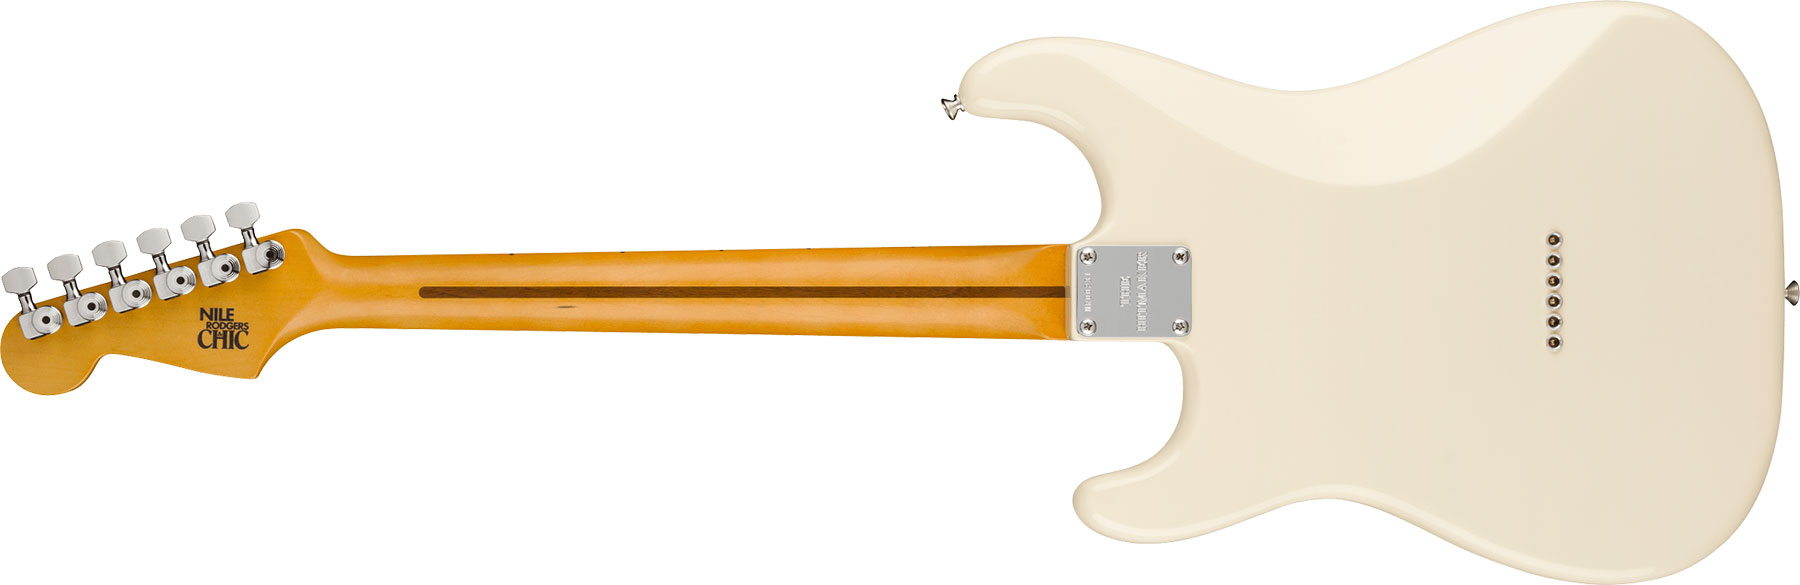 Fender Nile Rodgers Strat Hitmaker Usa Signature 3s Ht Mn - Olympic White - Guitare Électrique Forme Str - Variation 1